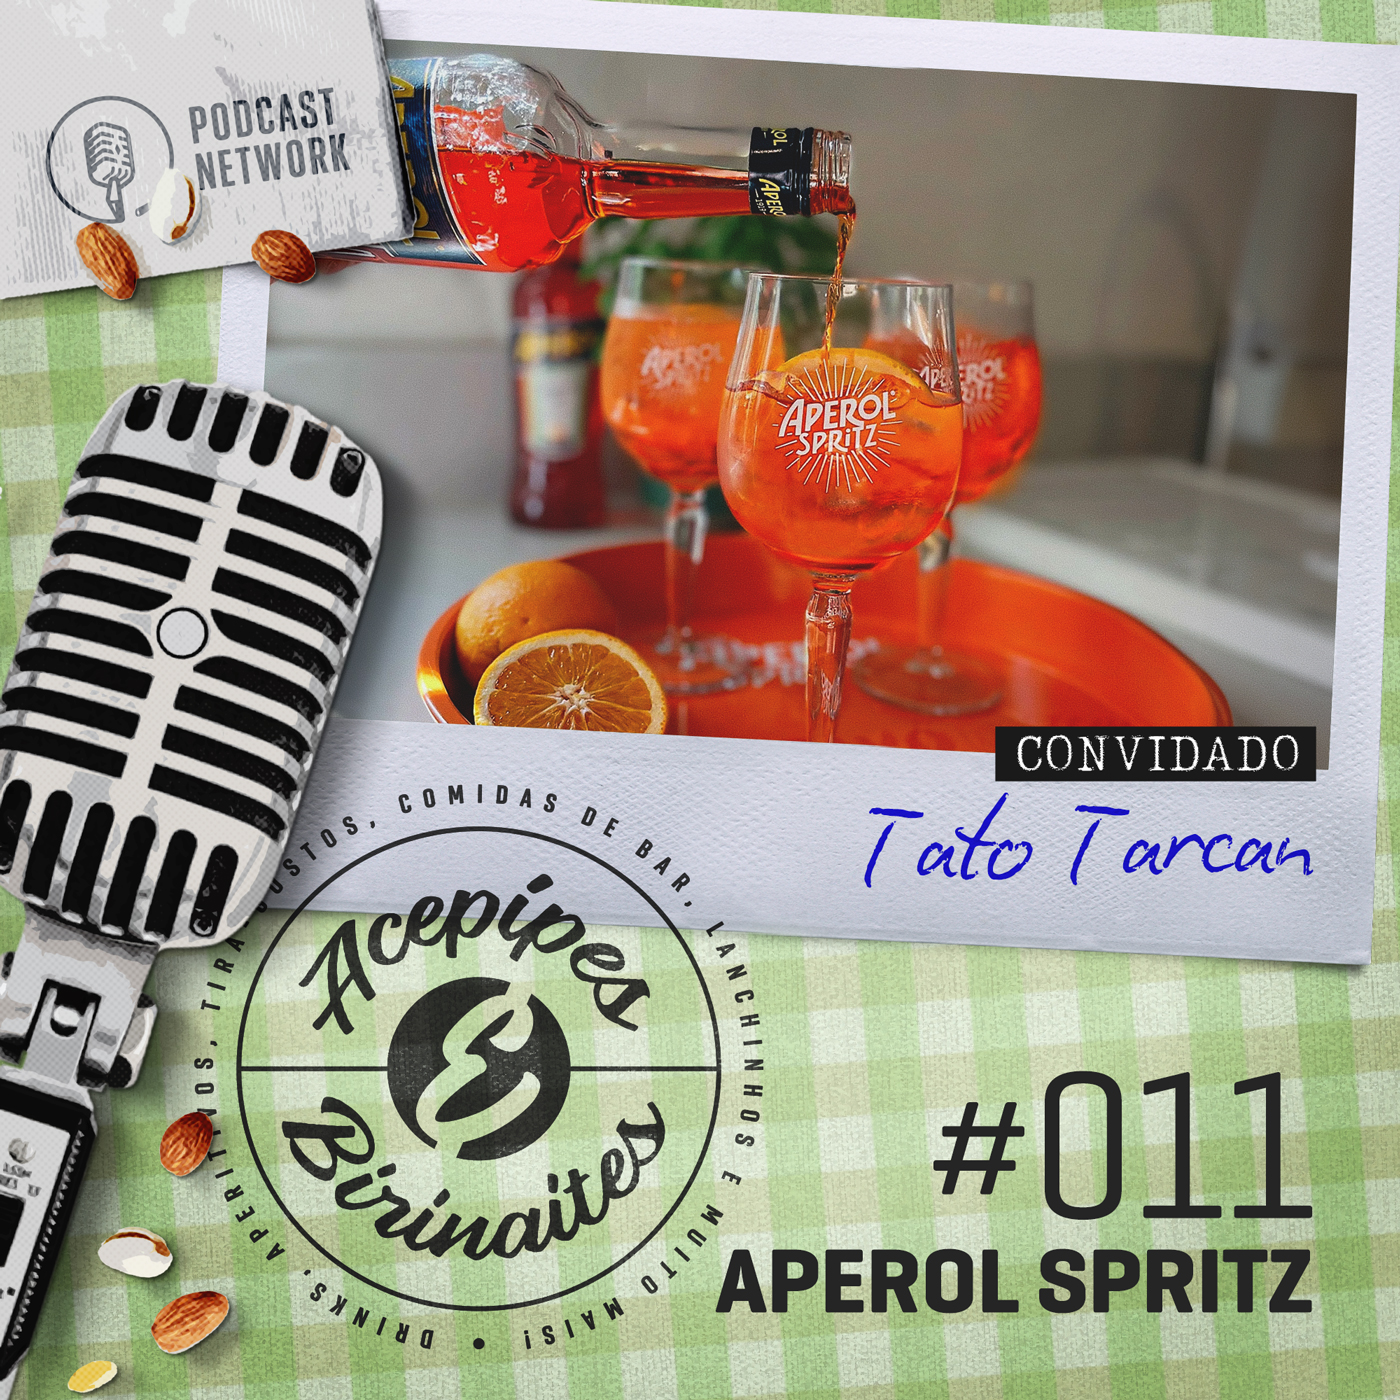 Acepipes e Birinaites #011 - Aperol Spritz, com Tato Tarcan